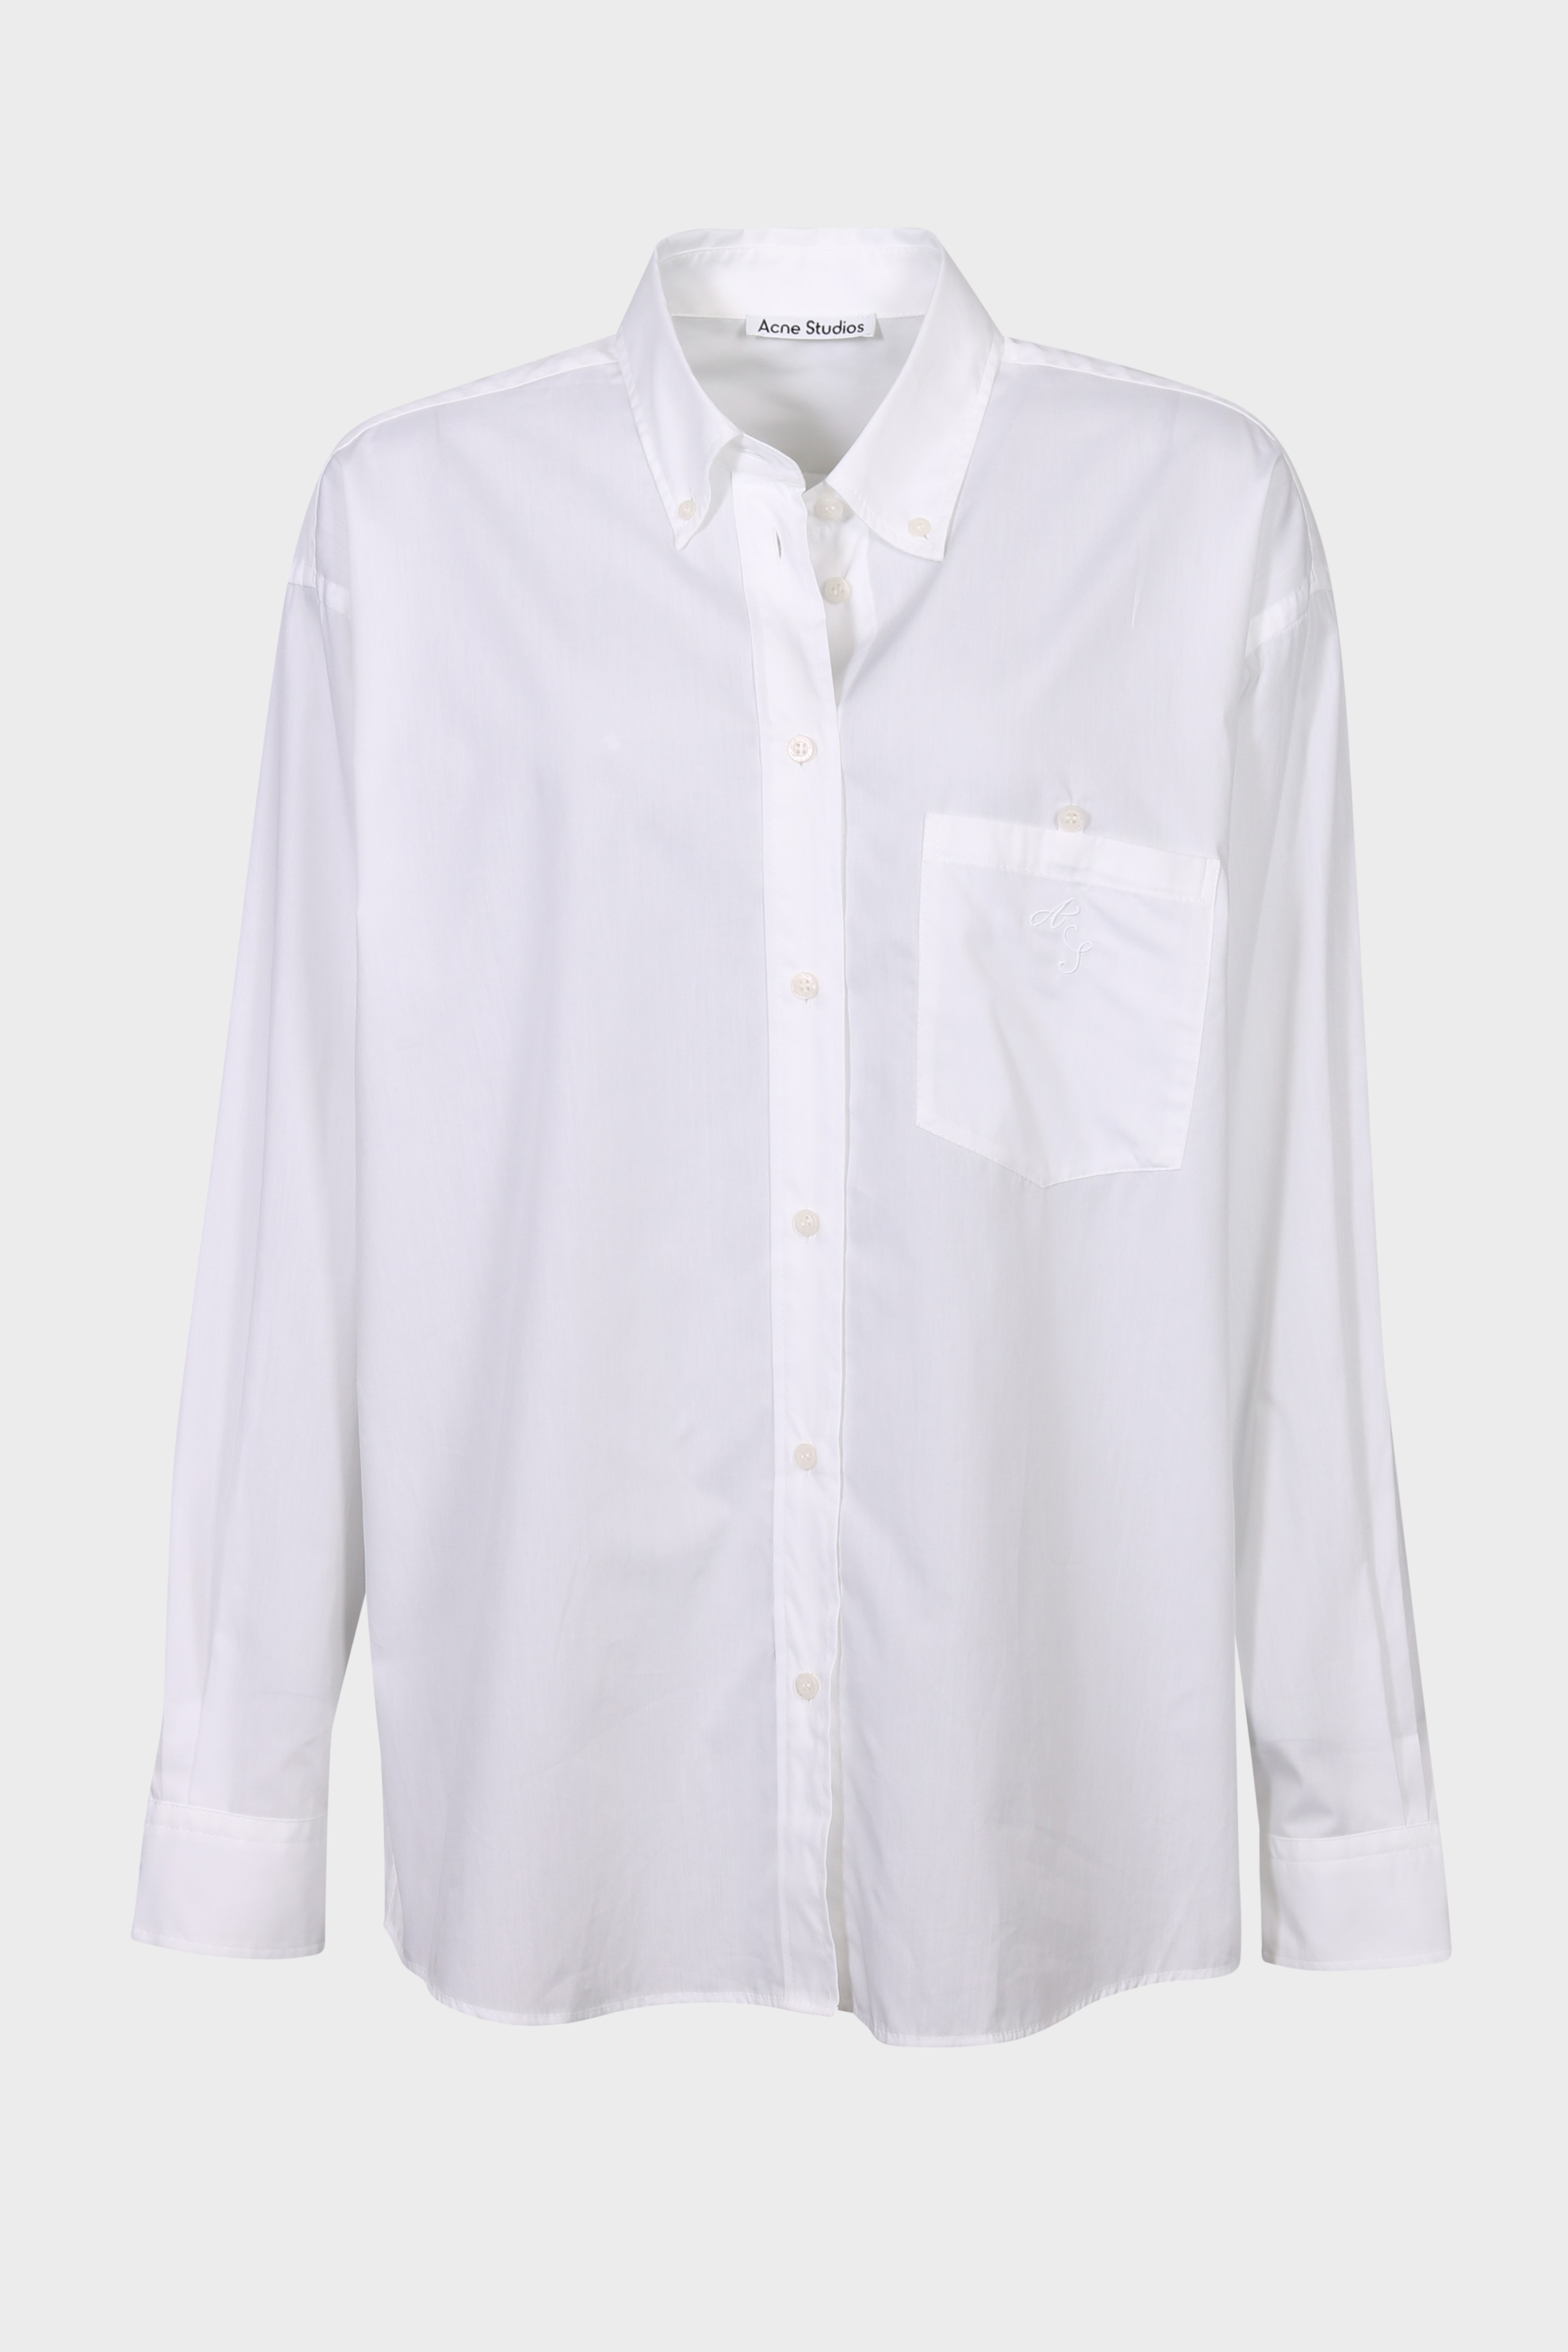 ACNE STUDIOS Oversize Shirt in White 34